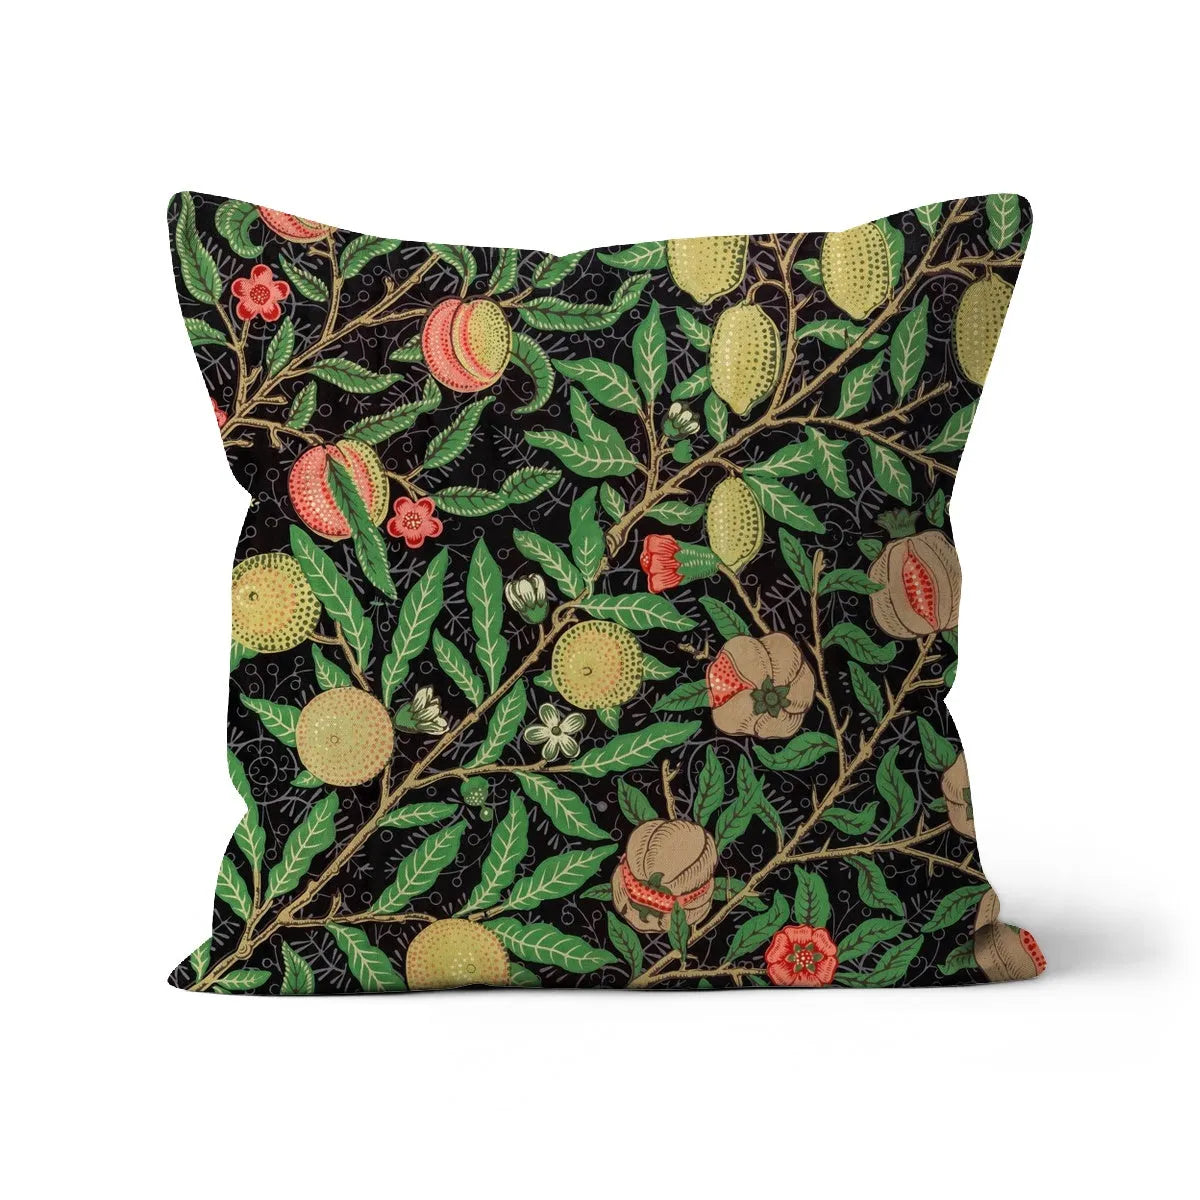 Four Fruits Too - William Morris Cushion - Decorative Throw Pillow - Linen / 18’x18’ - Throw Pillows - Aesthetic Art